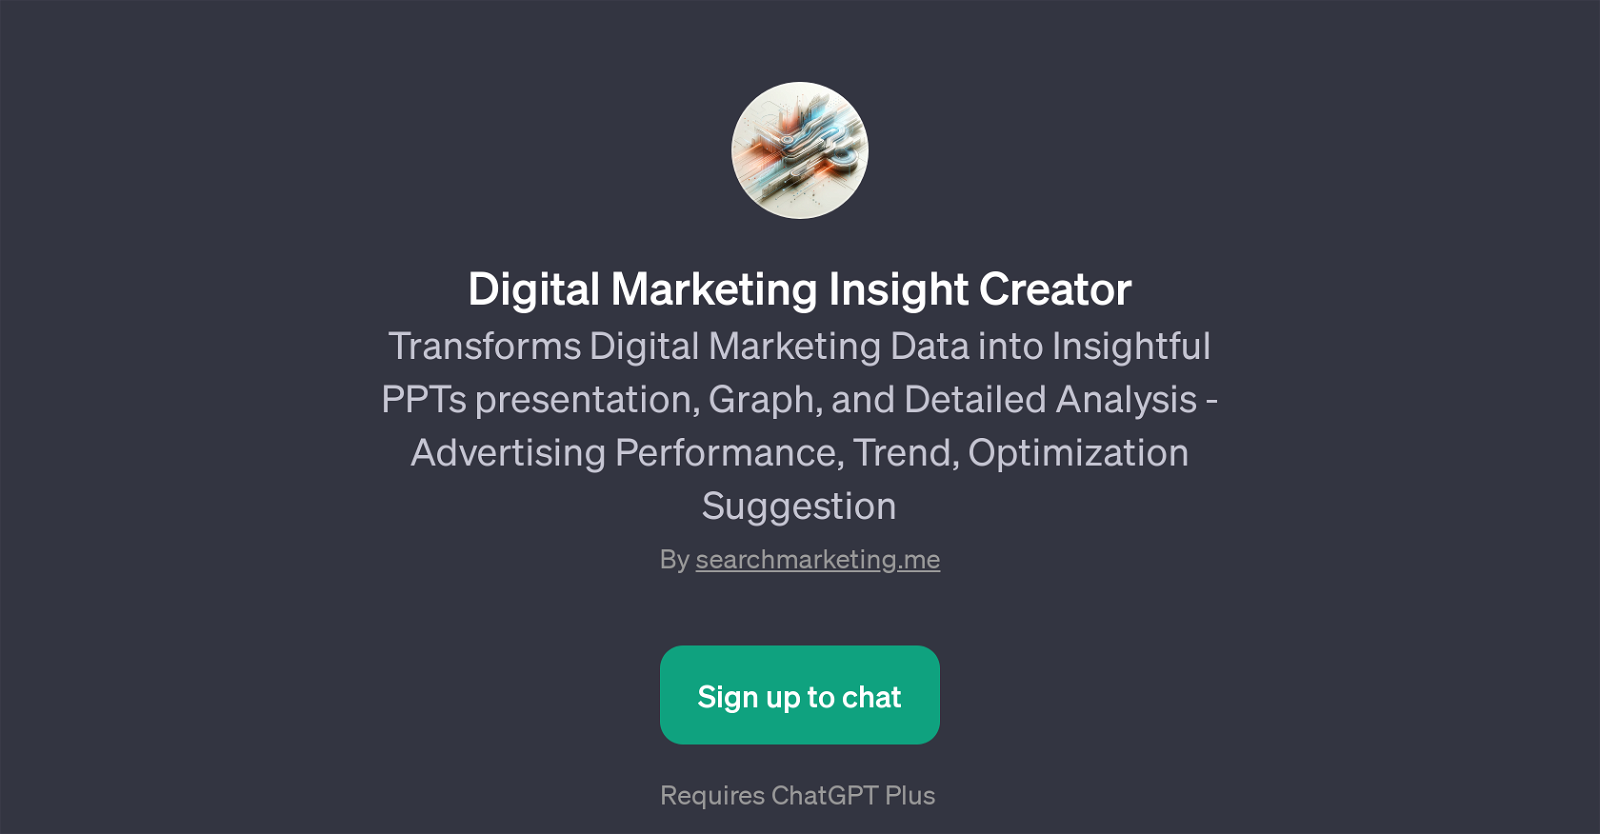 Digital Marketing Insight Creator website